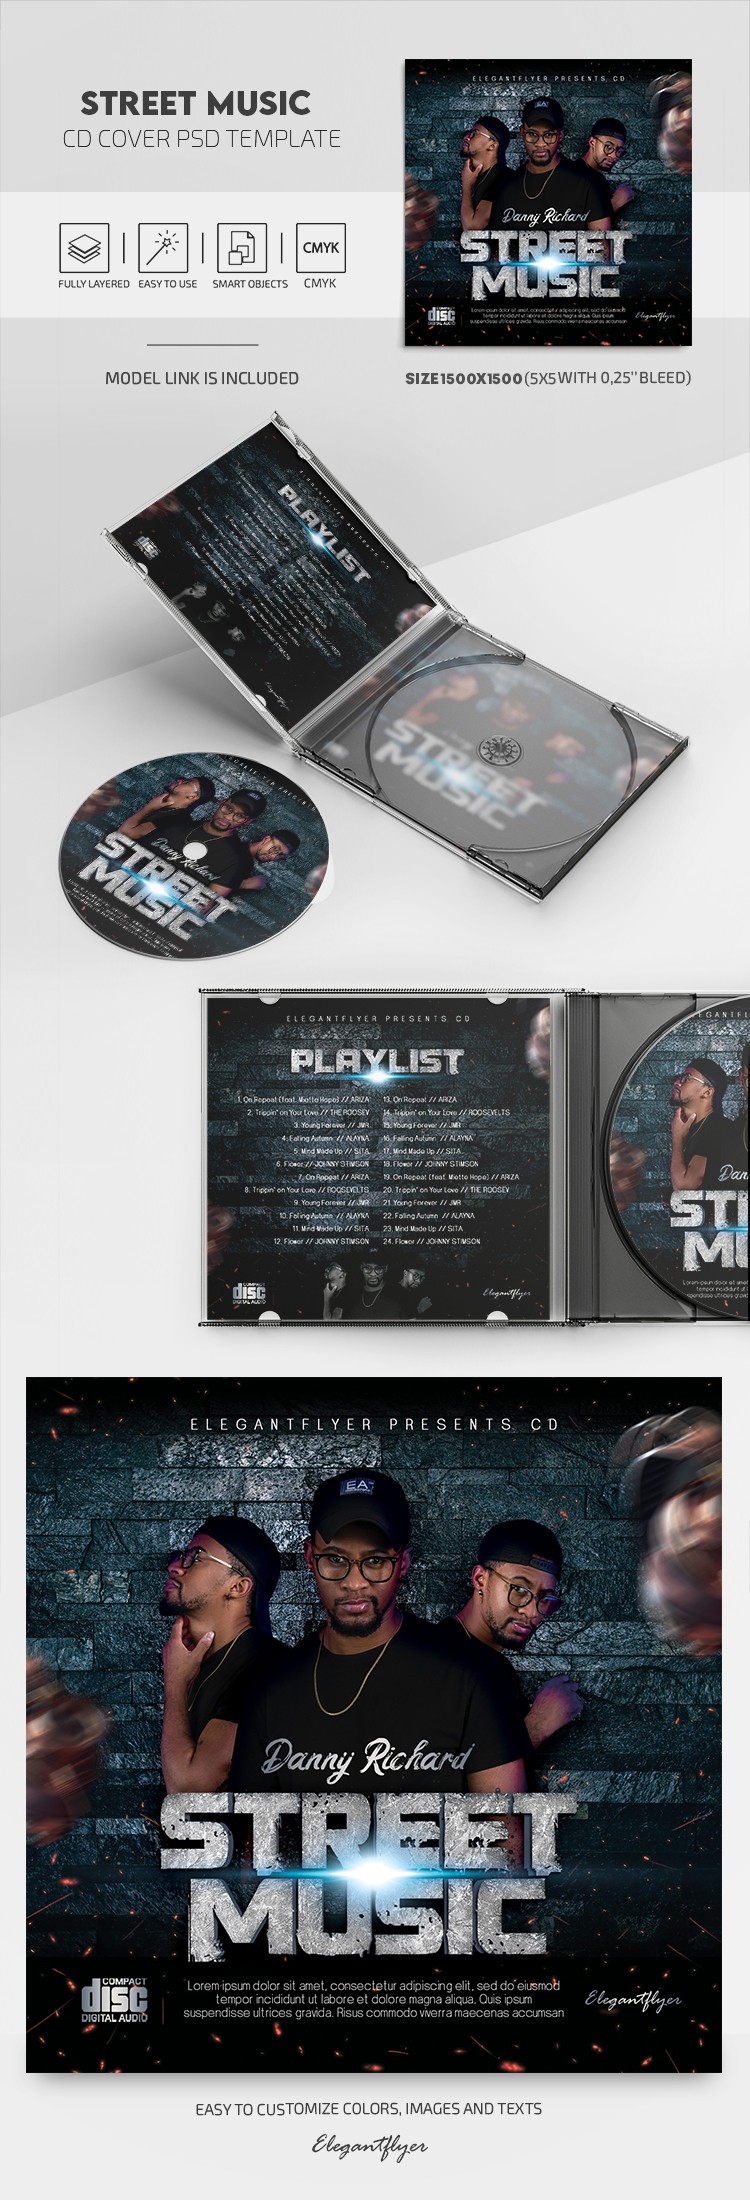 Street Music - Premium CD Cover PSD Template by ElegantFlyer